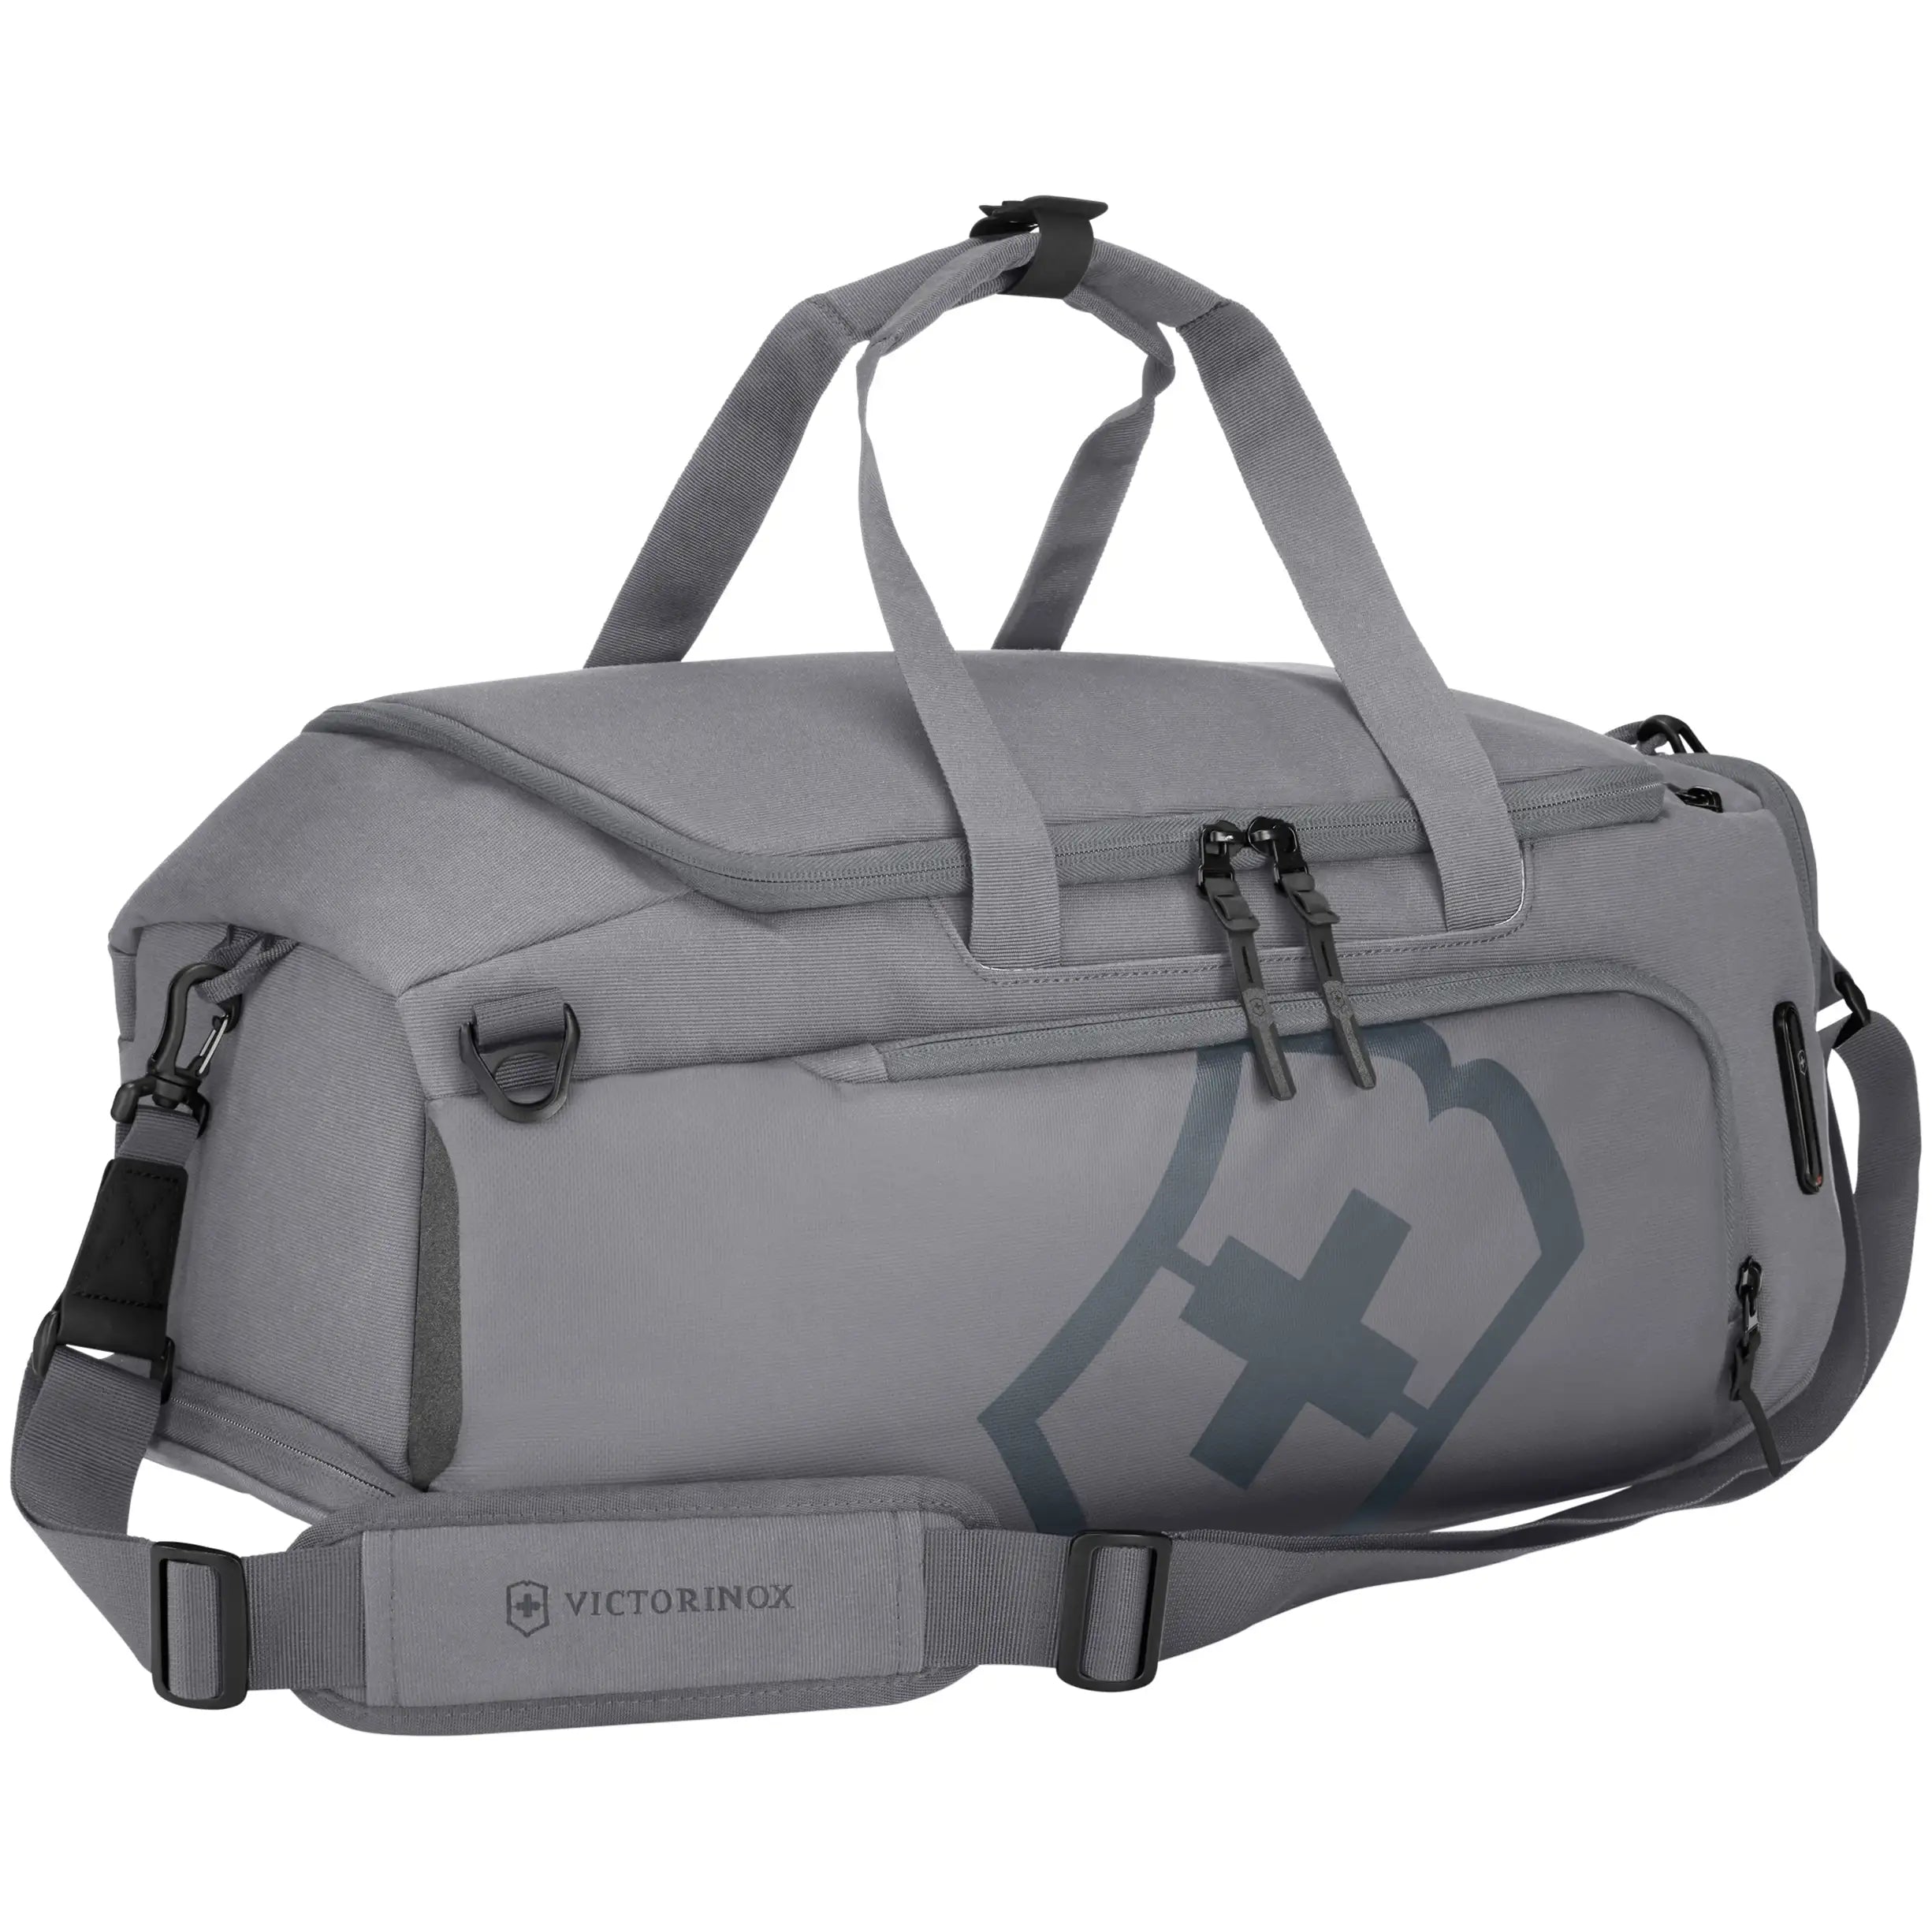 Victorinox Touring 2.0 Travel 2in1 Duffel Travel Bag 57 cm - Stone Grey